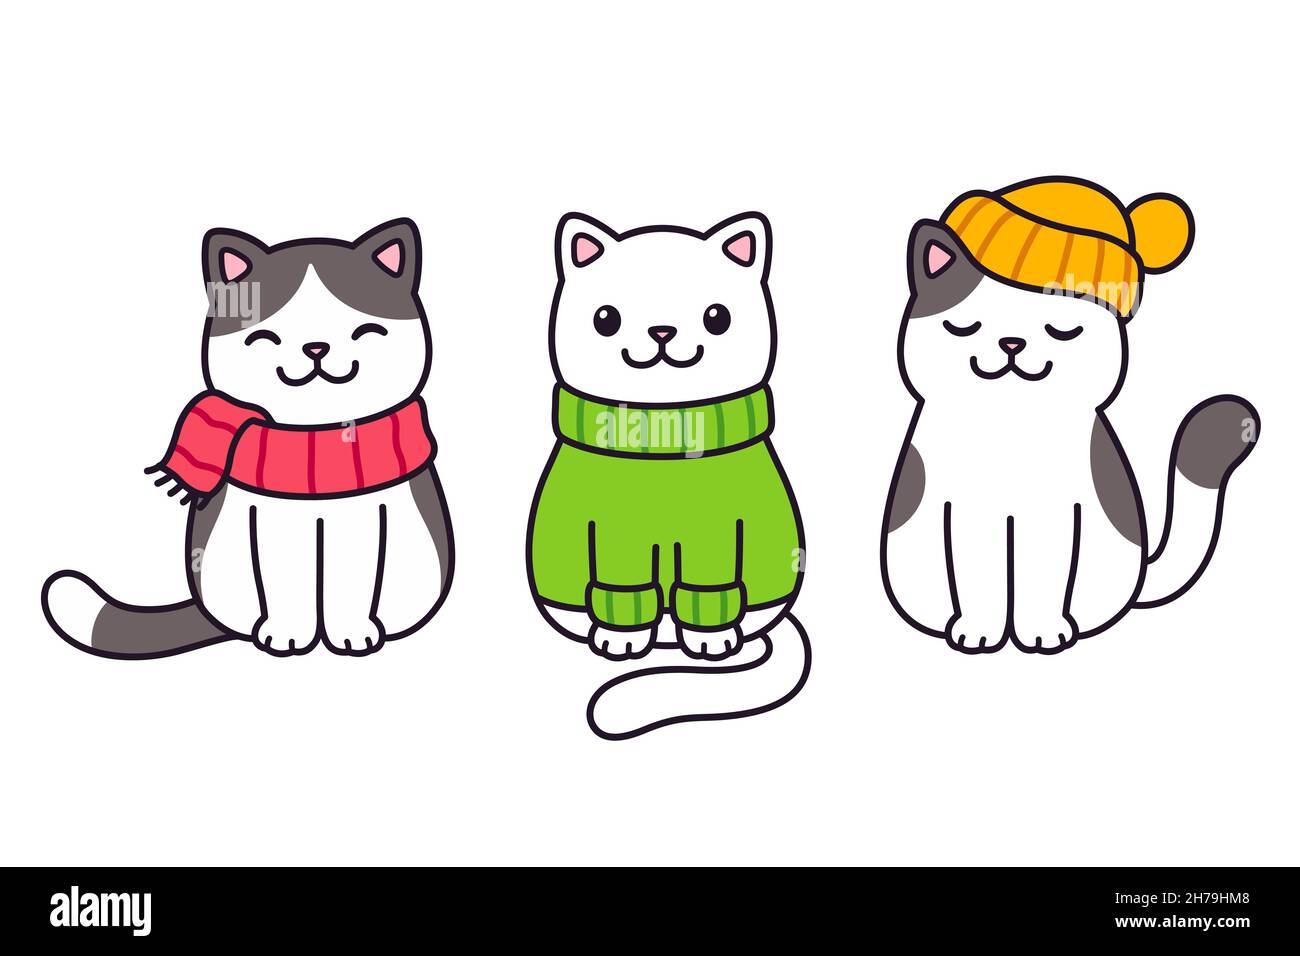 Cute cartoon cats in knit clothes: sweater, scarf and hat. Three kawaii kitties keeping warm in winter season. Vector clip art illustration. Stock Vector